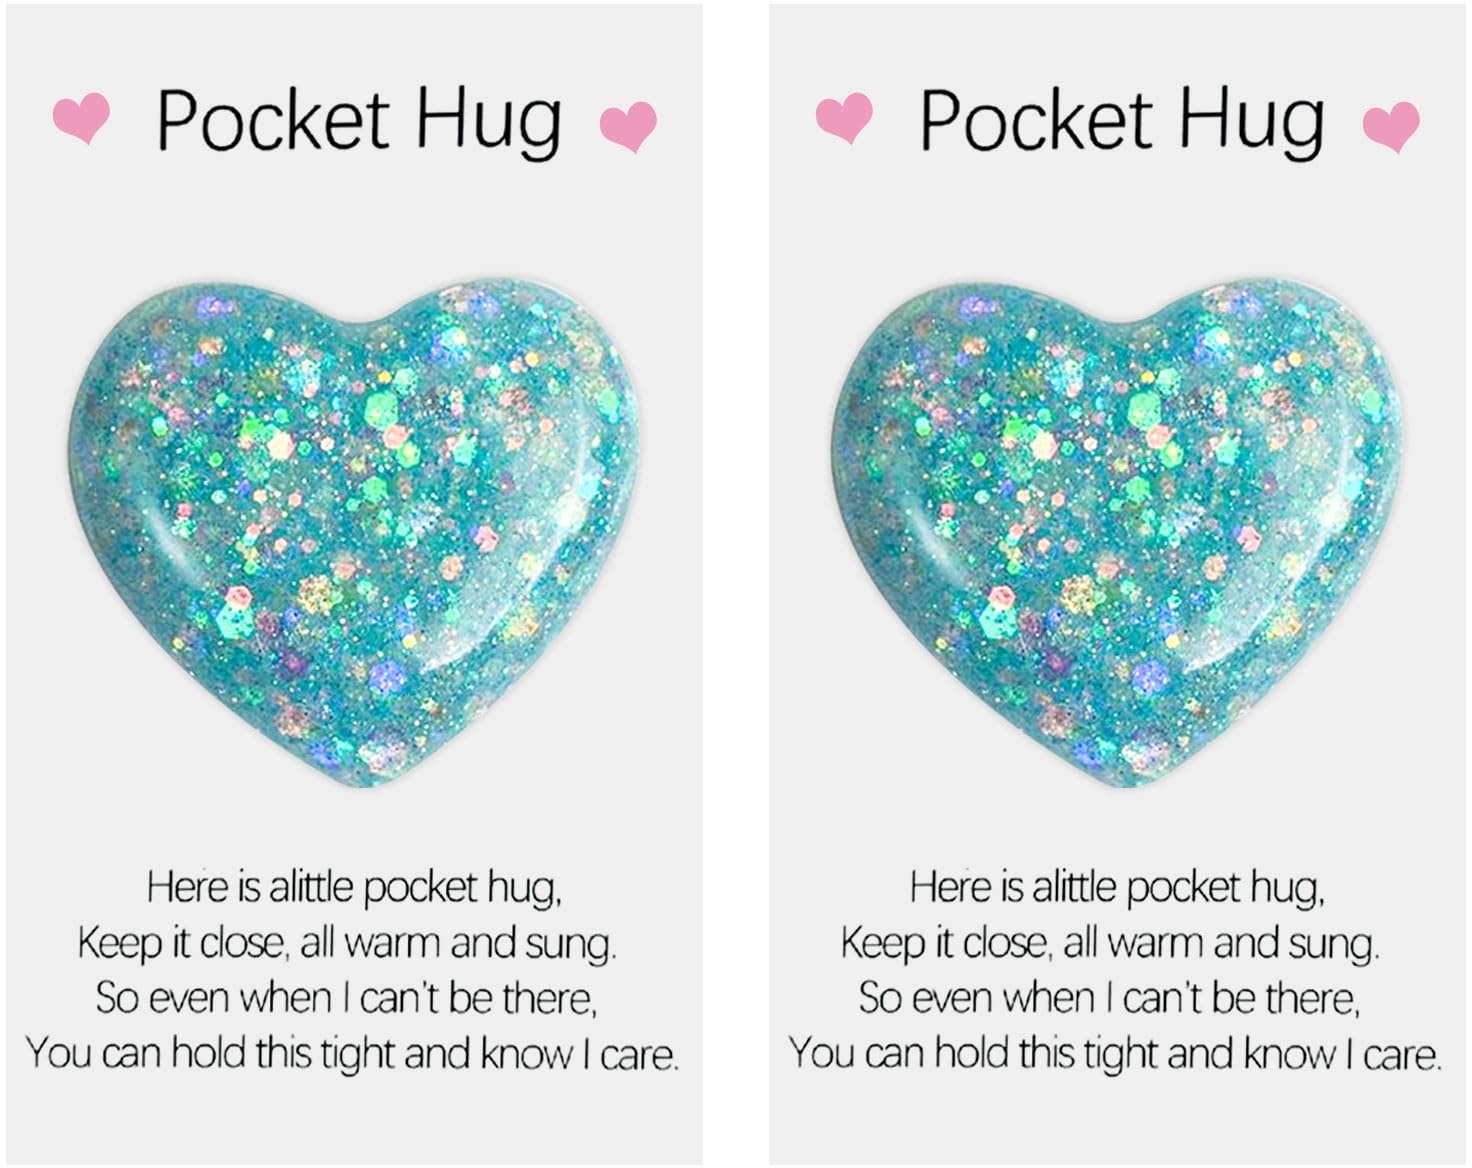 SKHAOVS 2 Pack Pocket Hug Heart Mini Cute Pocket Heart Hug Decoration Thinking of You Gifts, Pocket Hug Token with Pocket Hug Card, Gift for Birthday Wedding Mothers Day Valentines (2 Pack)